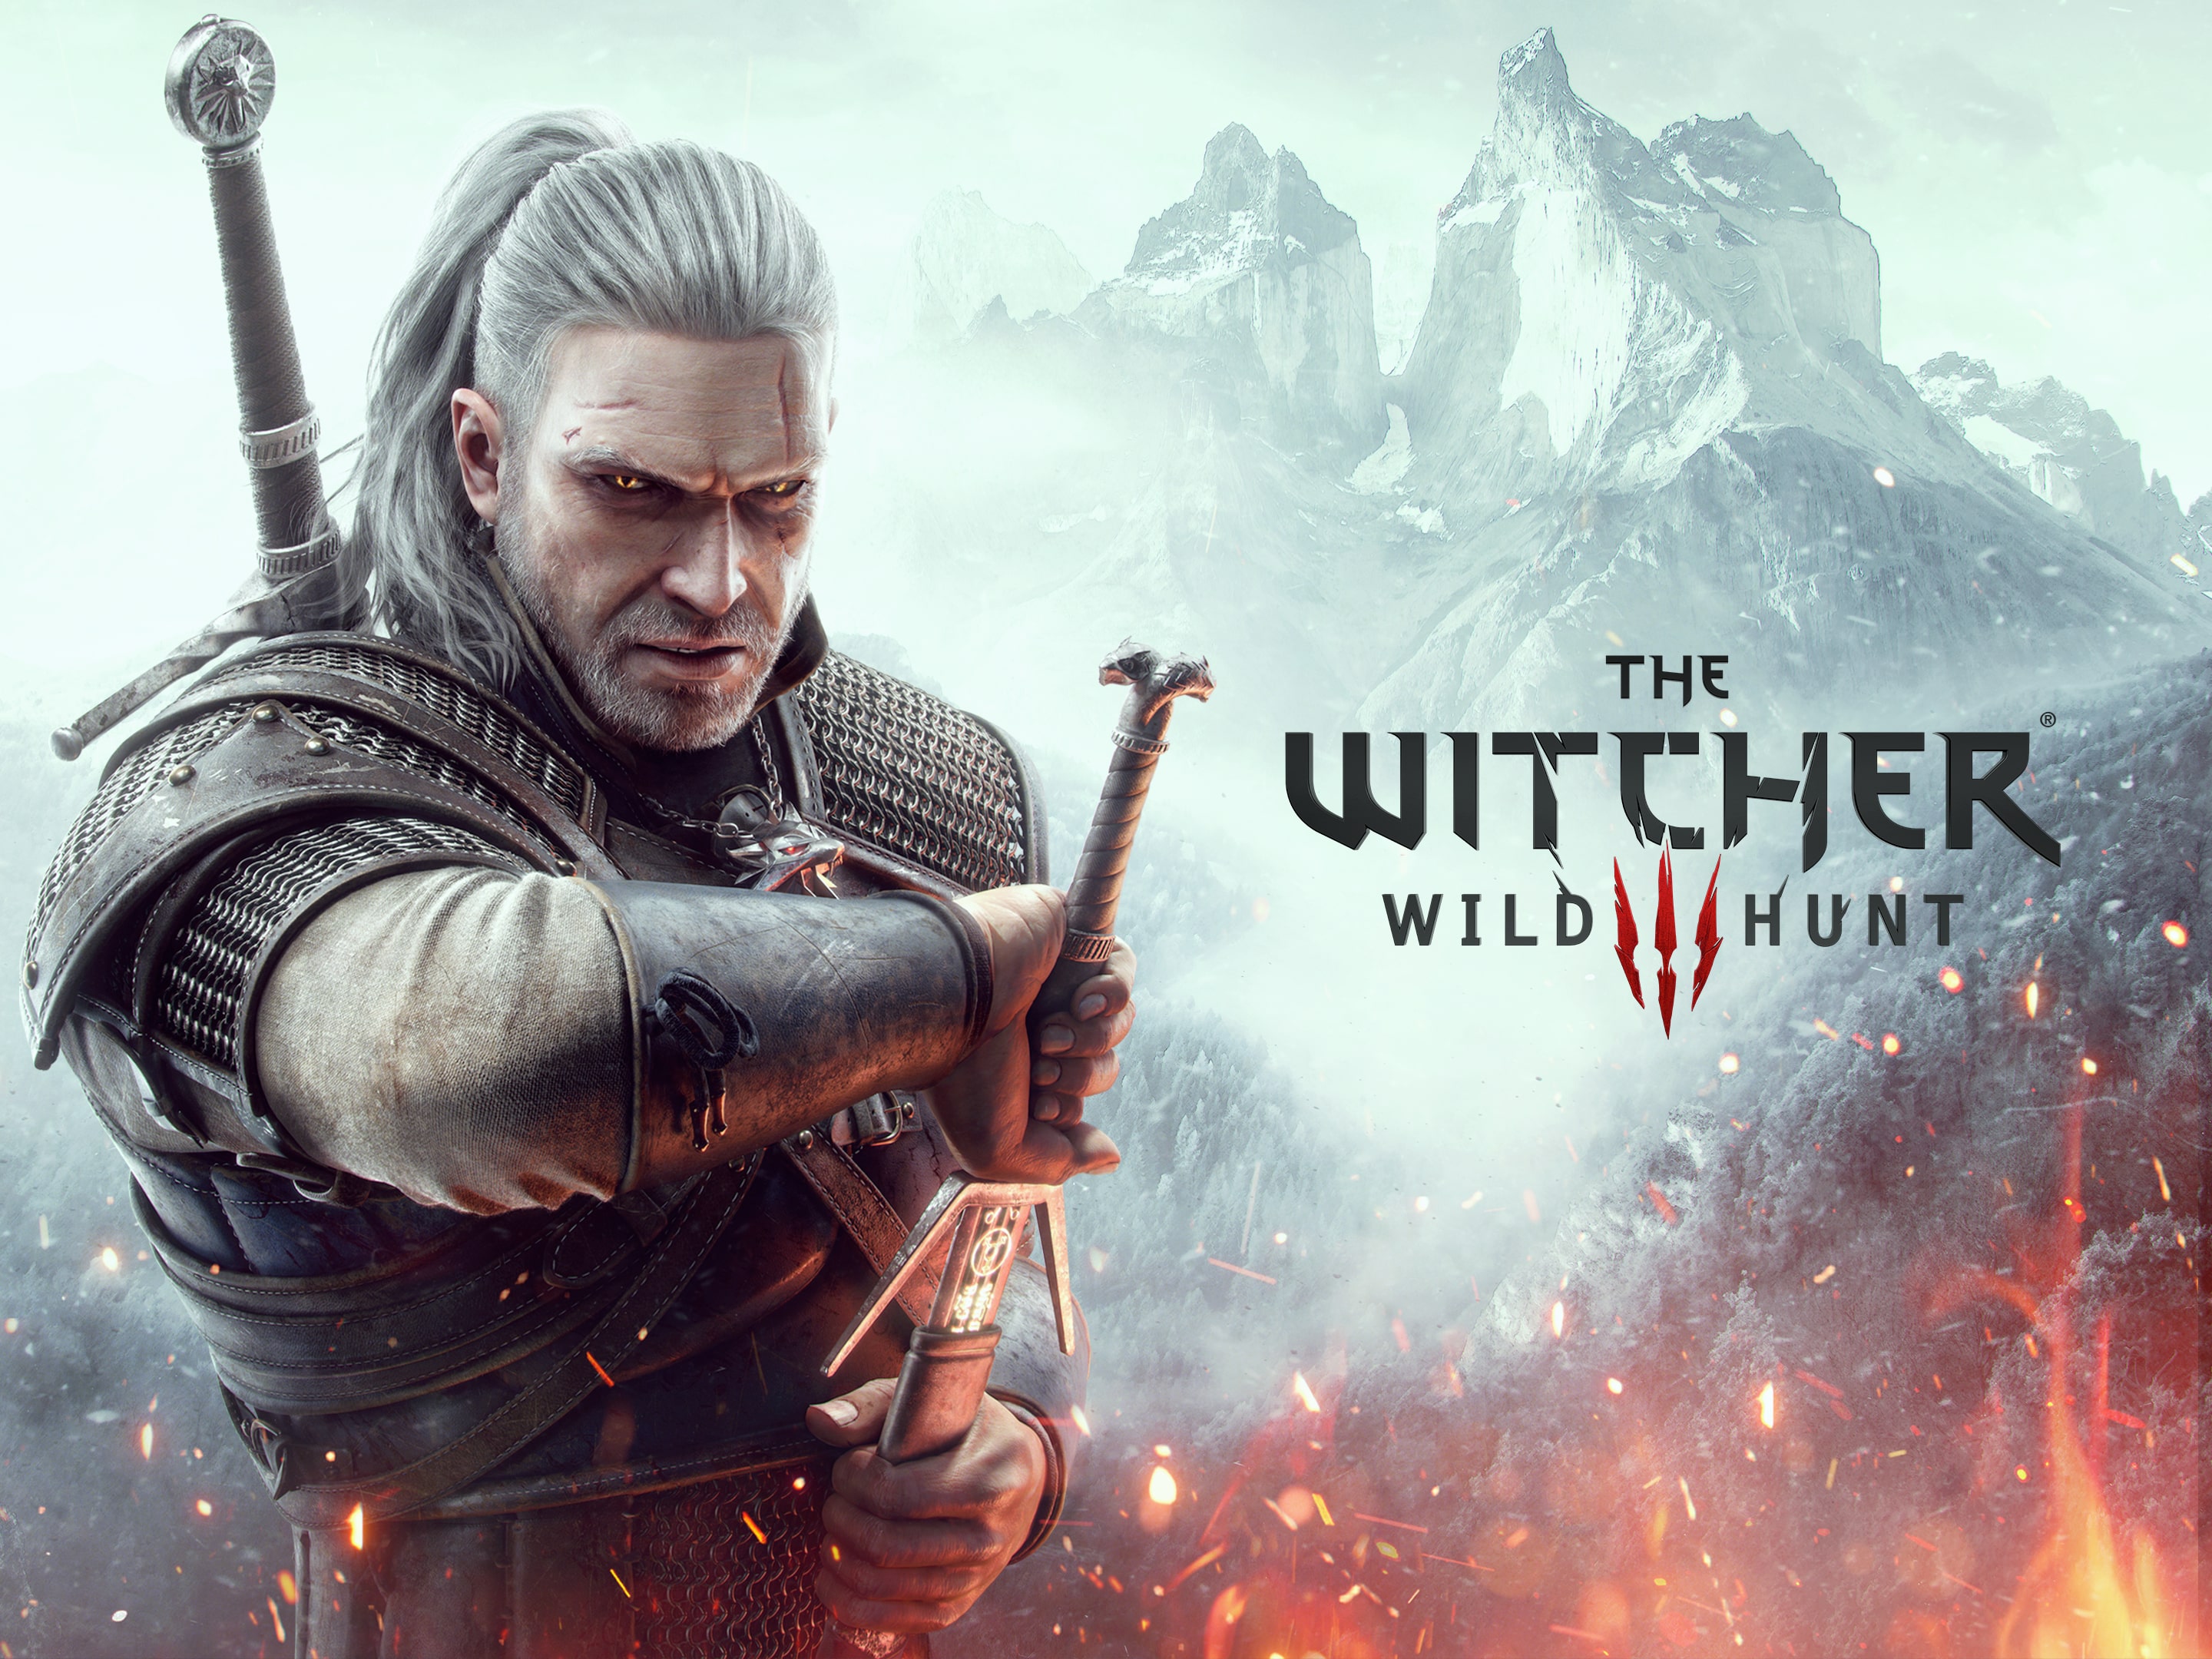 The Witcher Wild Hunt (Sony PlayStation 4, 2017) REGION 2